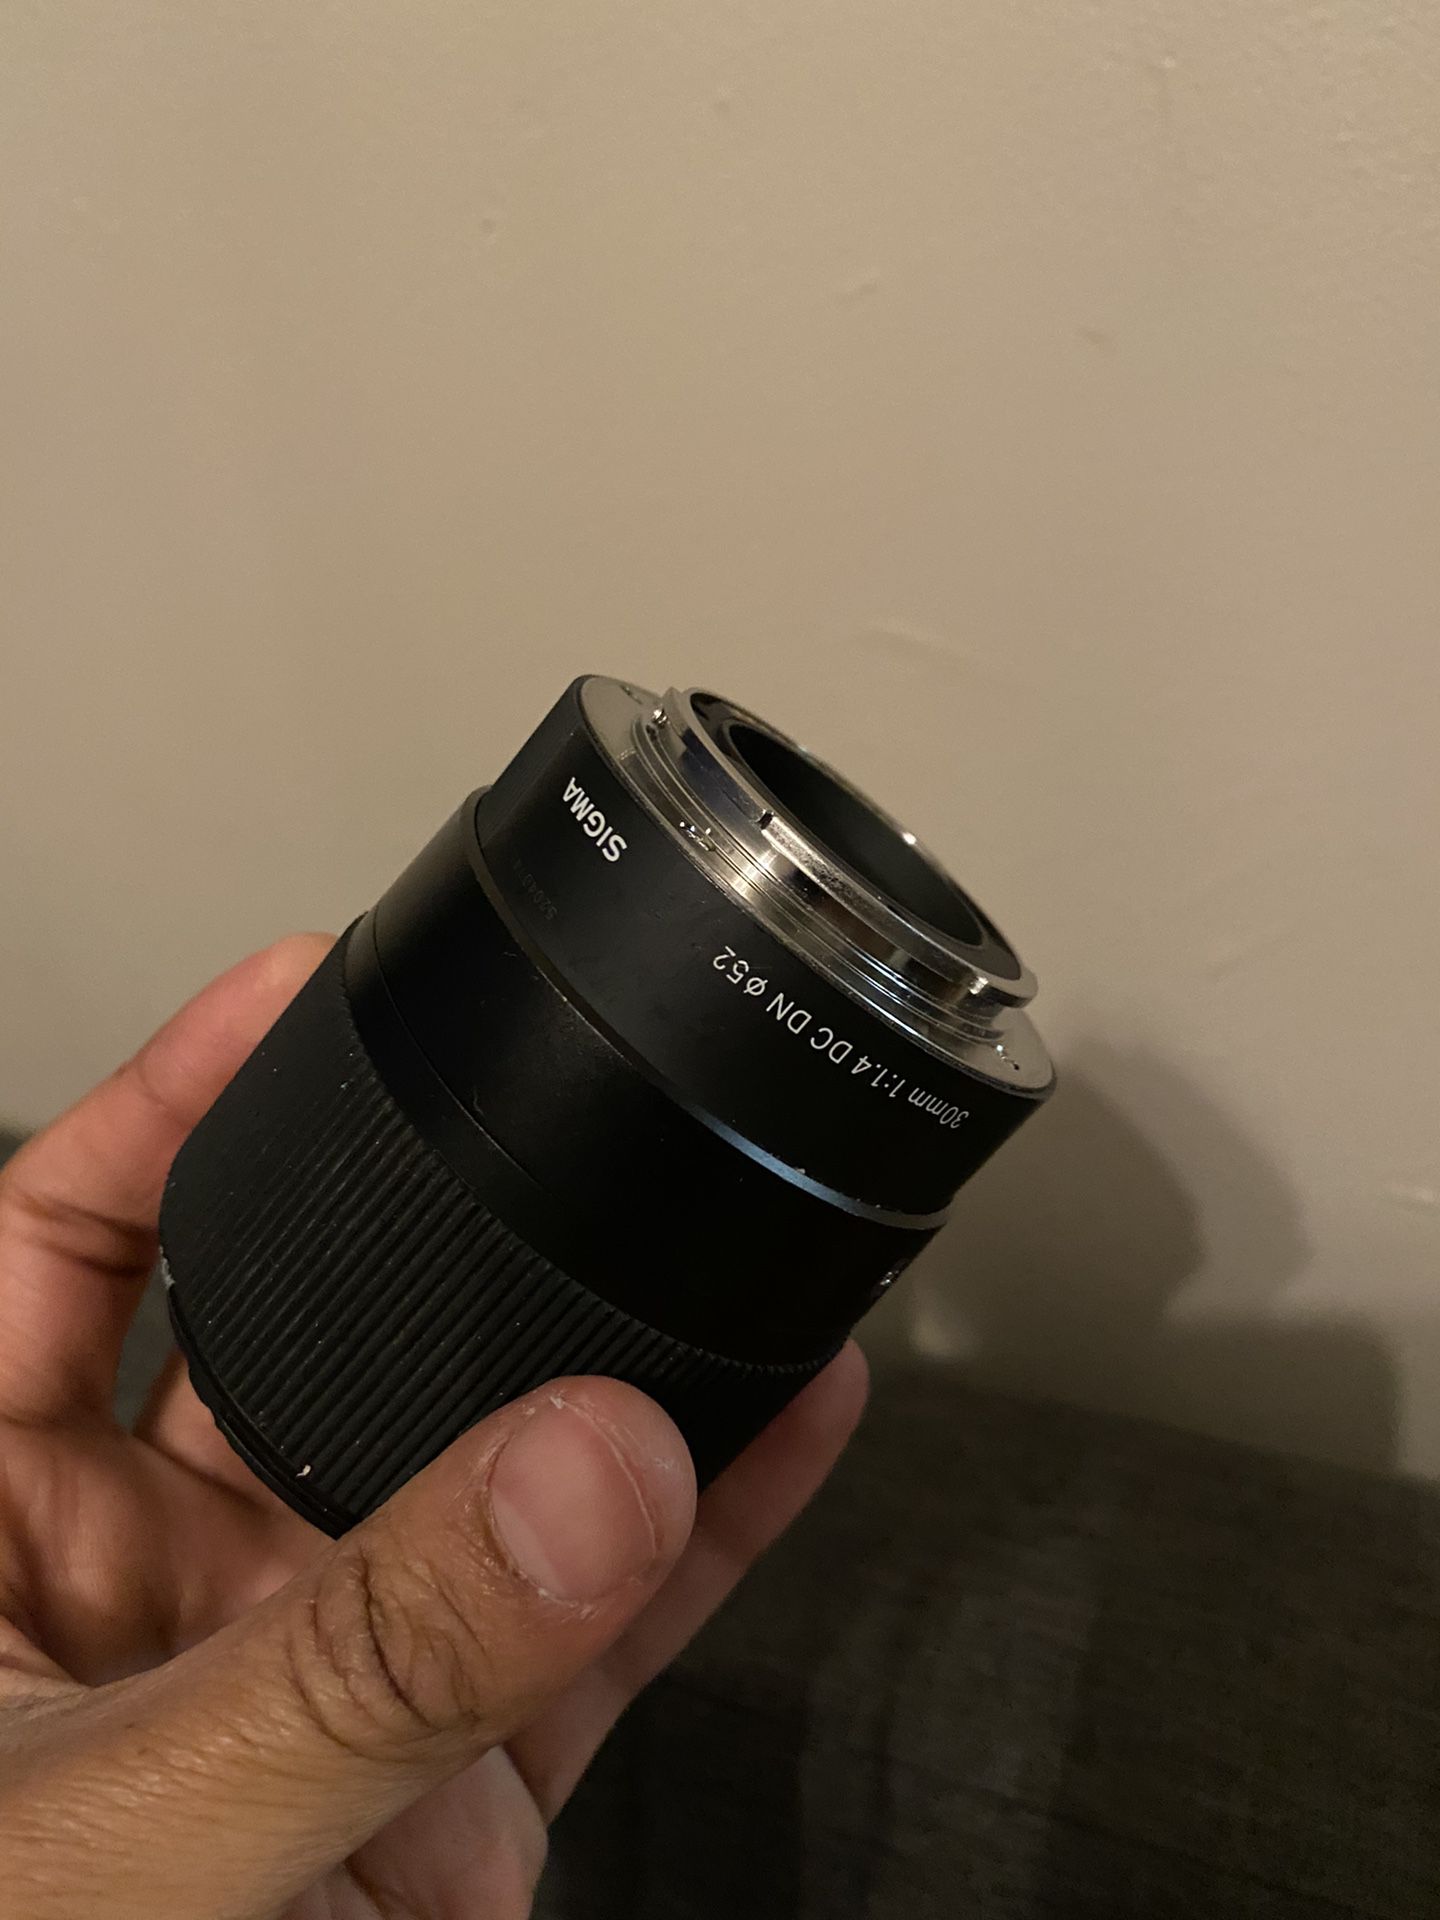 Sigma 30mm lens for EMount Cameras